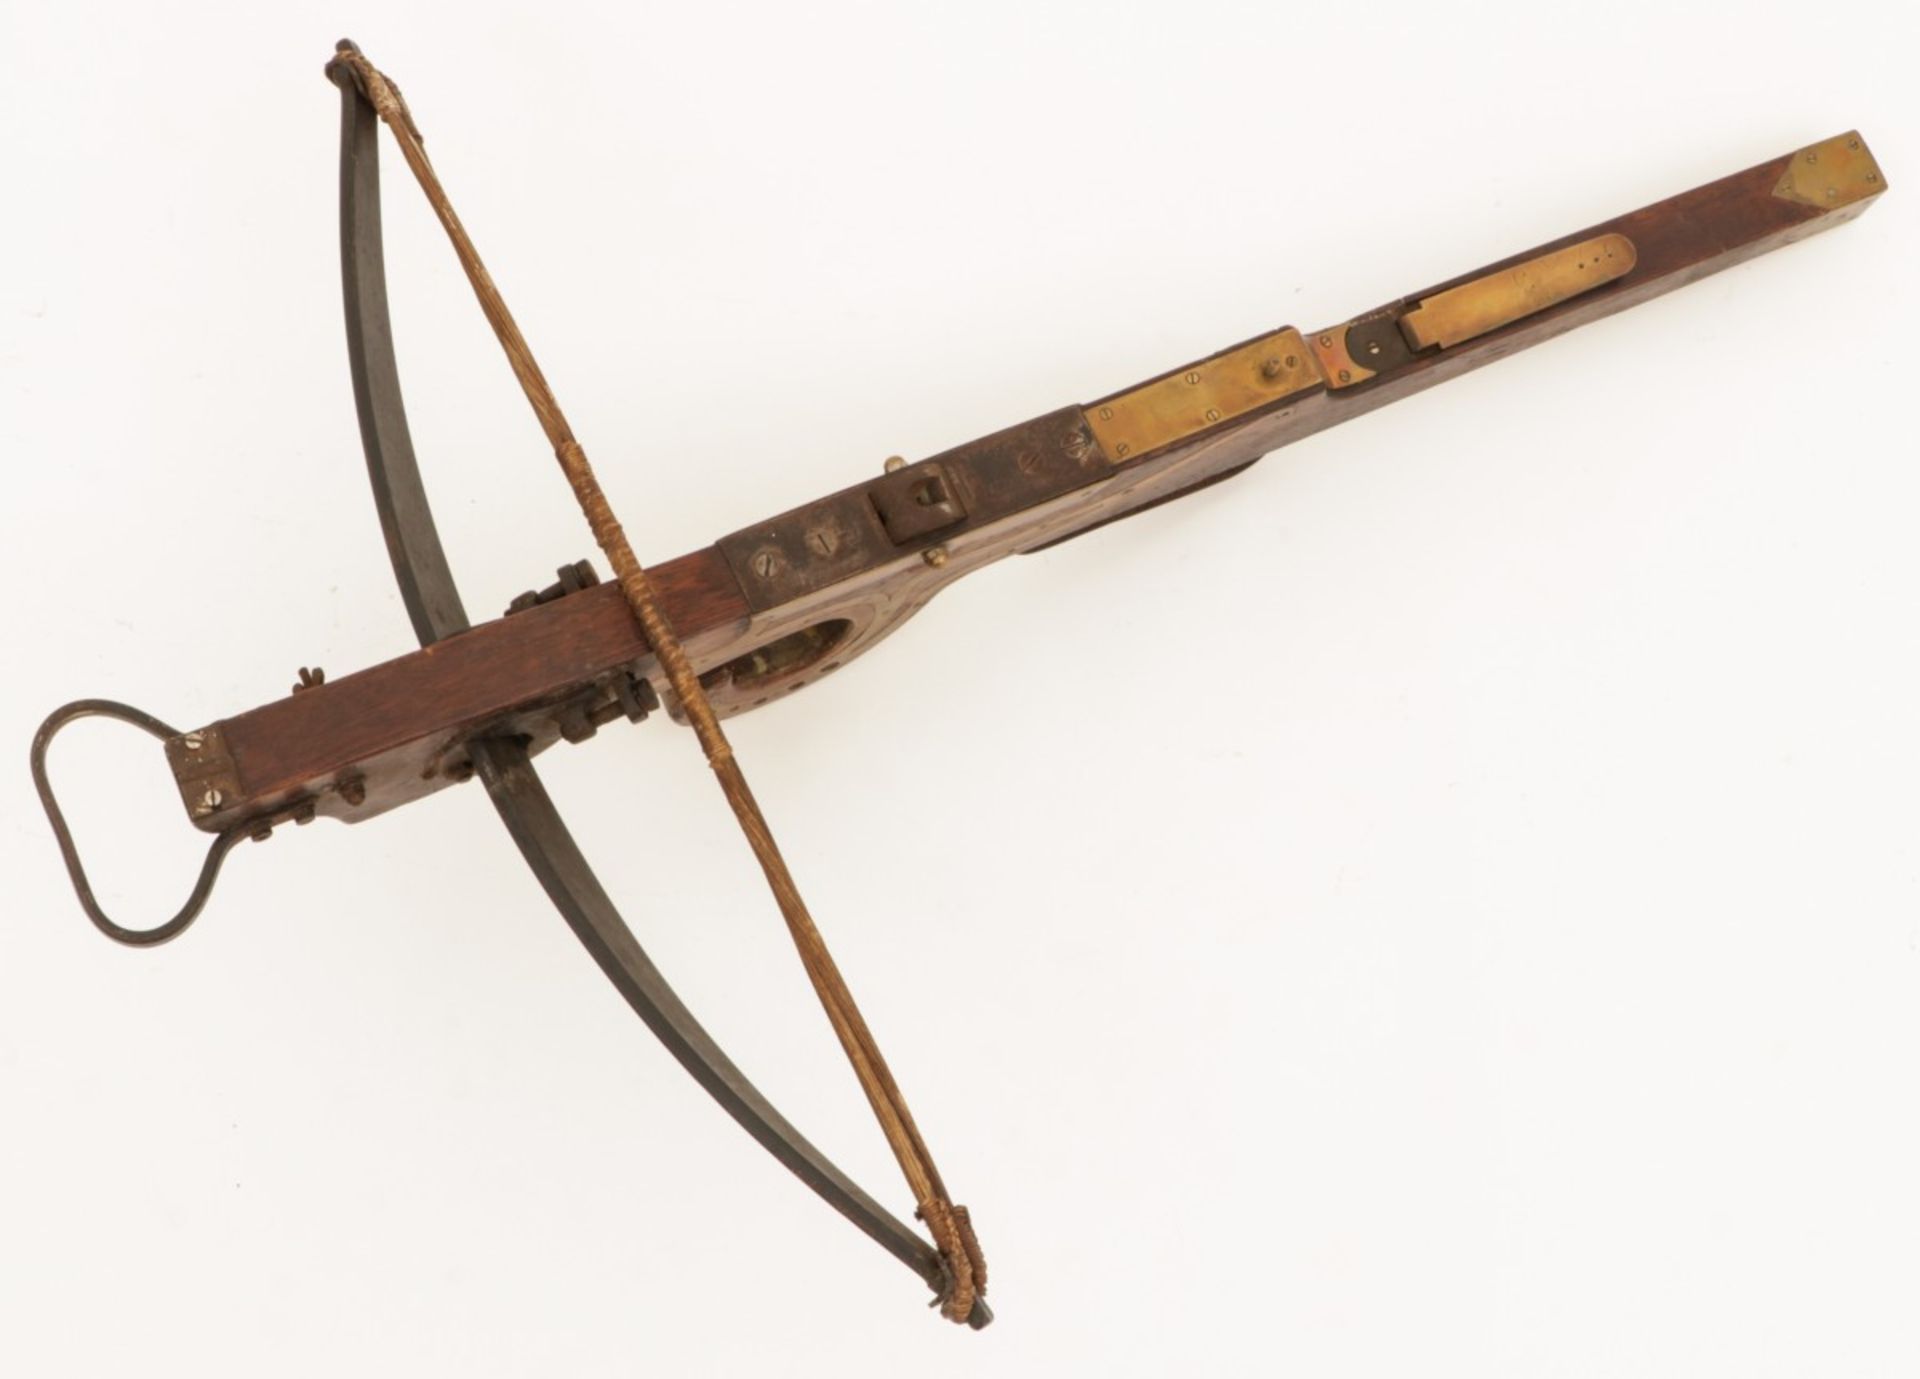 An iron/ wood cross bow, late 19th century.